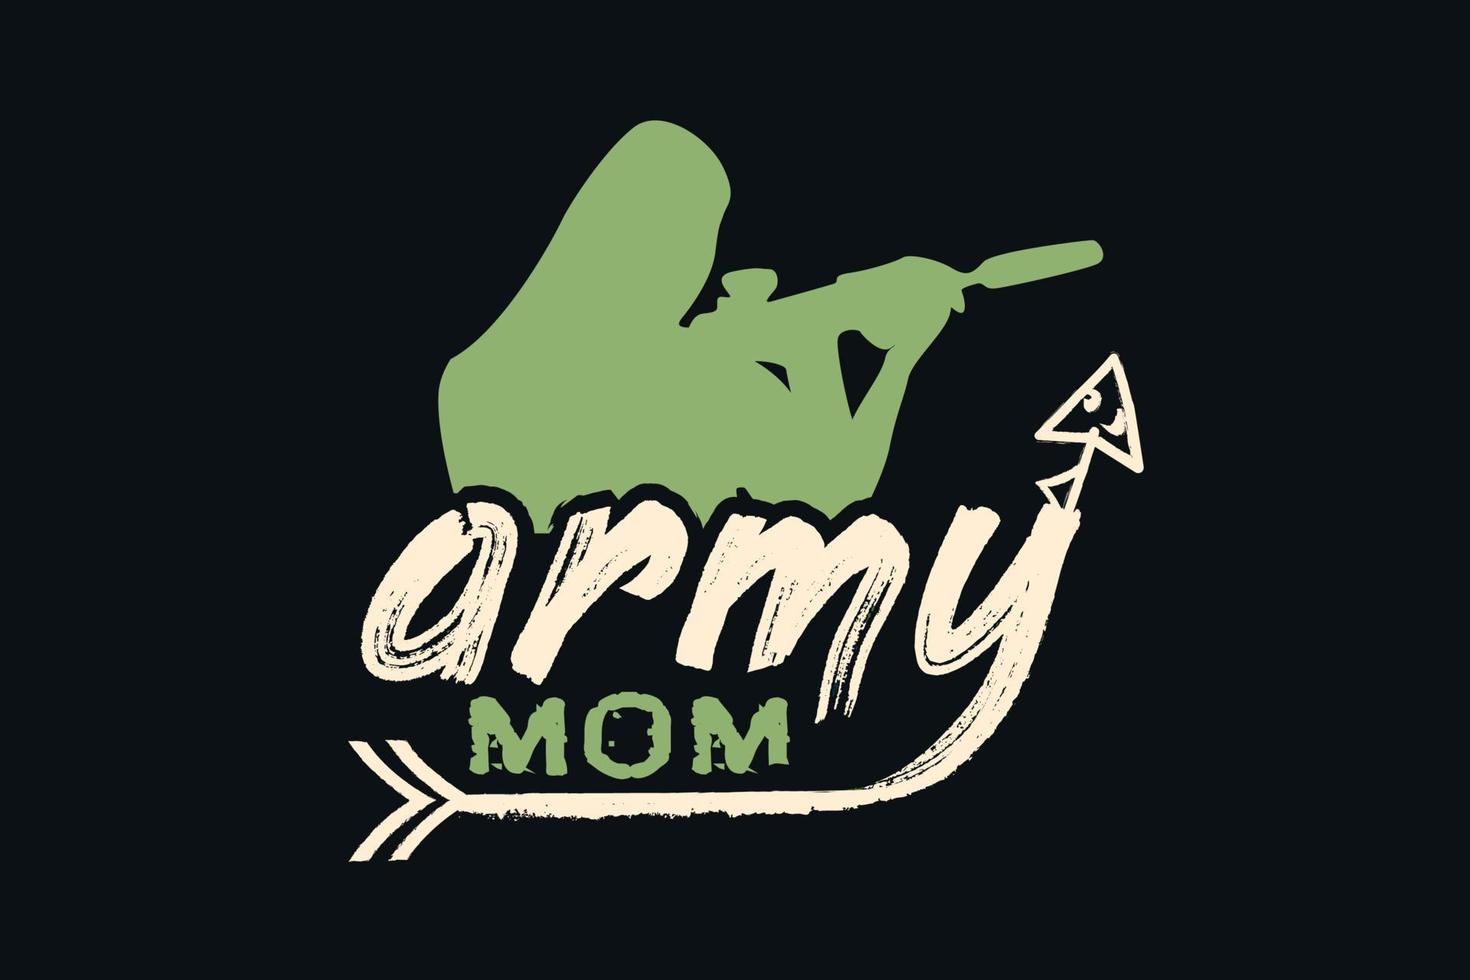 leger moeder t-shirt ontwerp. vector